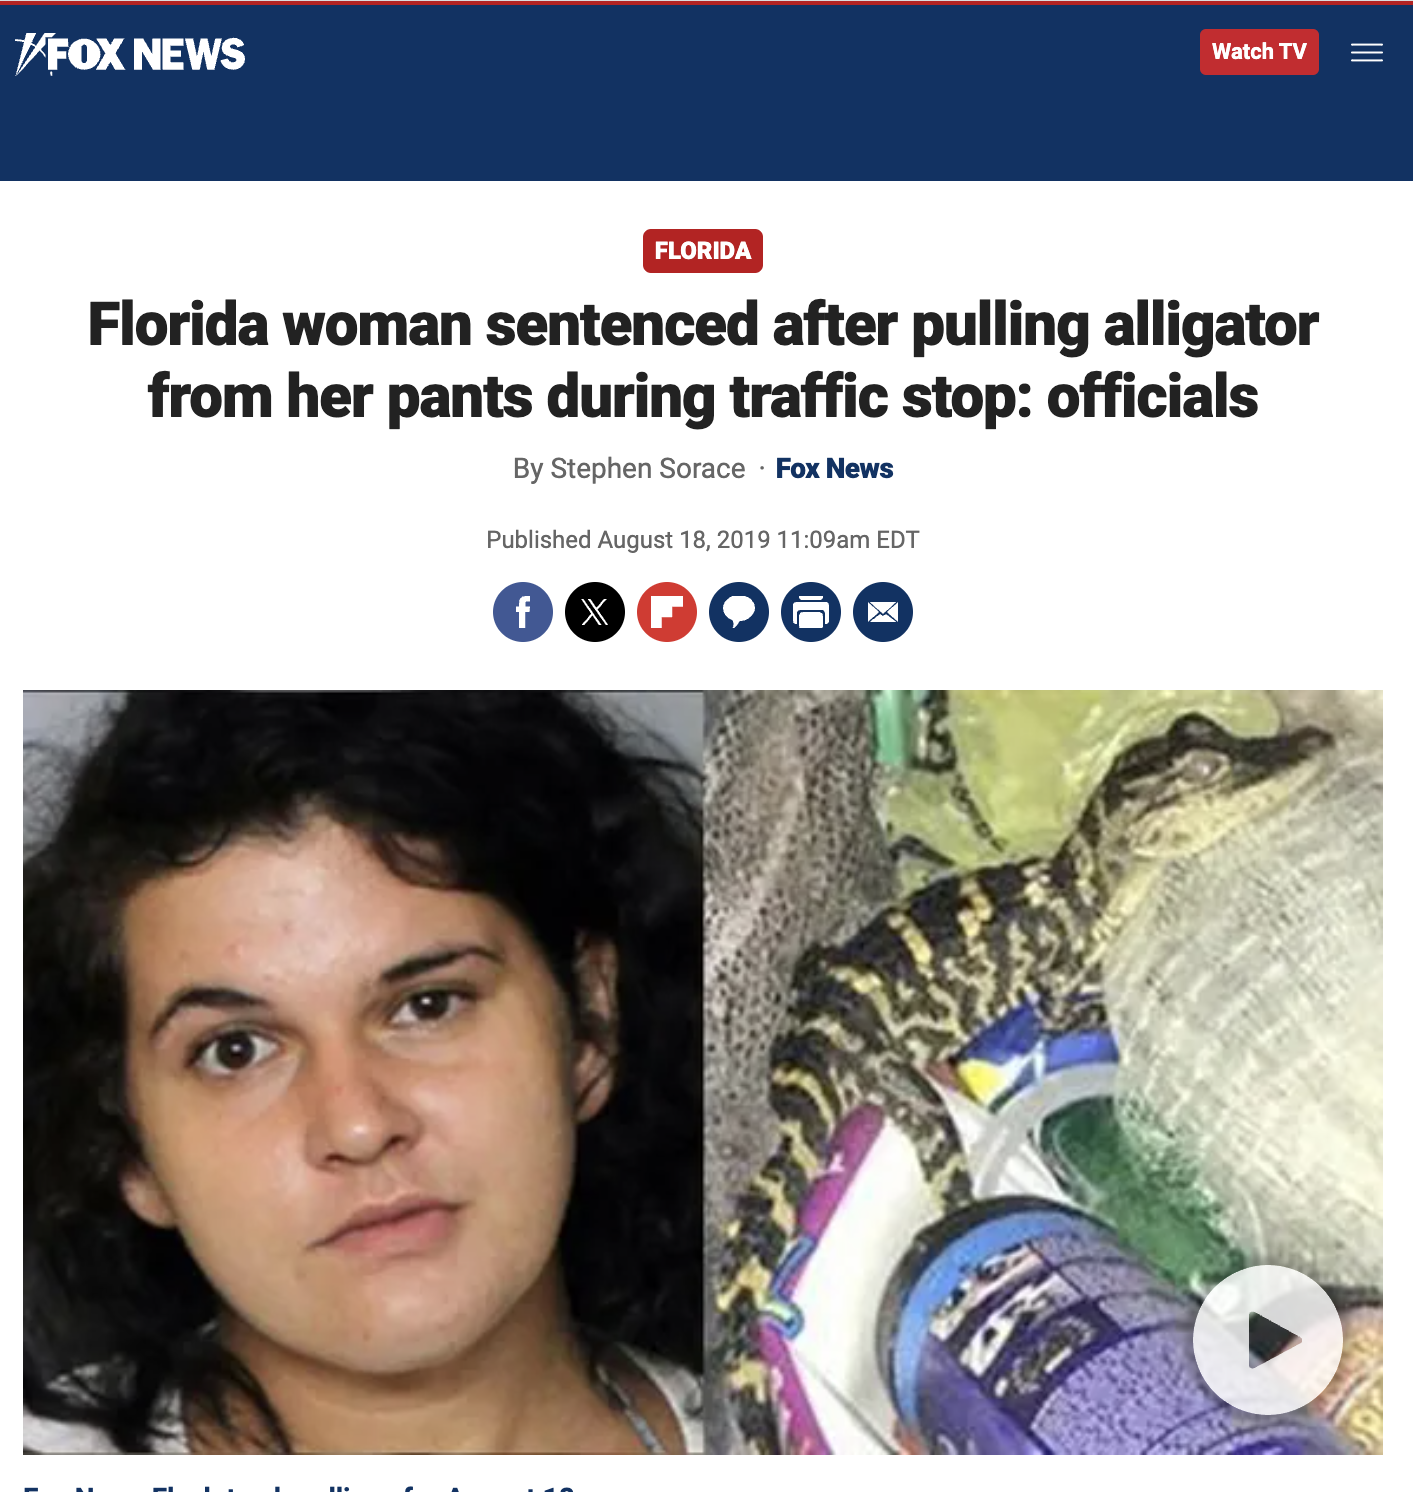 15 Florida Woman Headlines to Celebrate International Women's Day